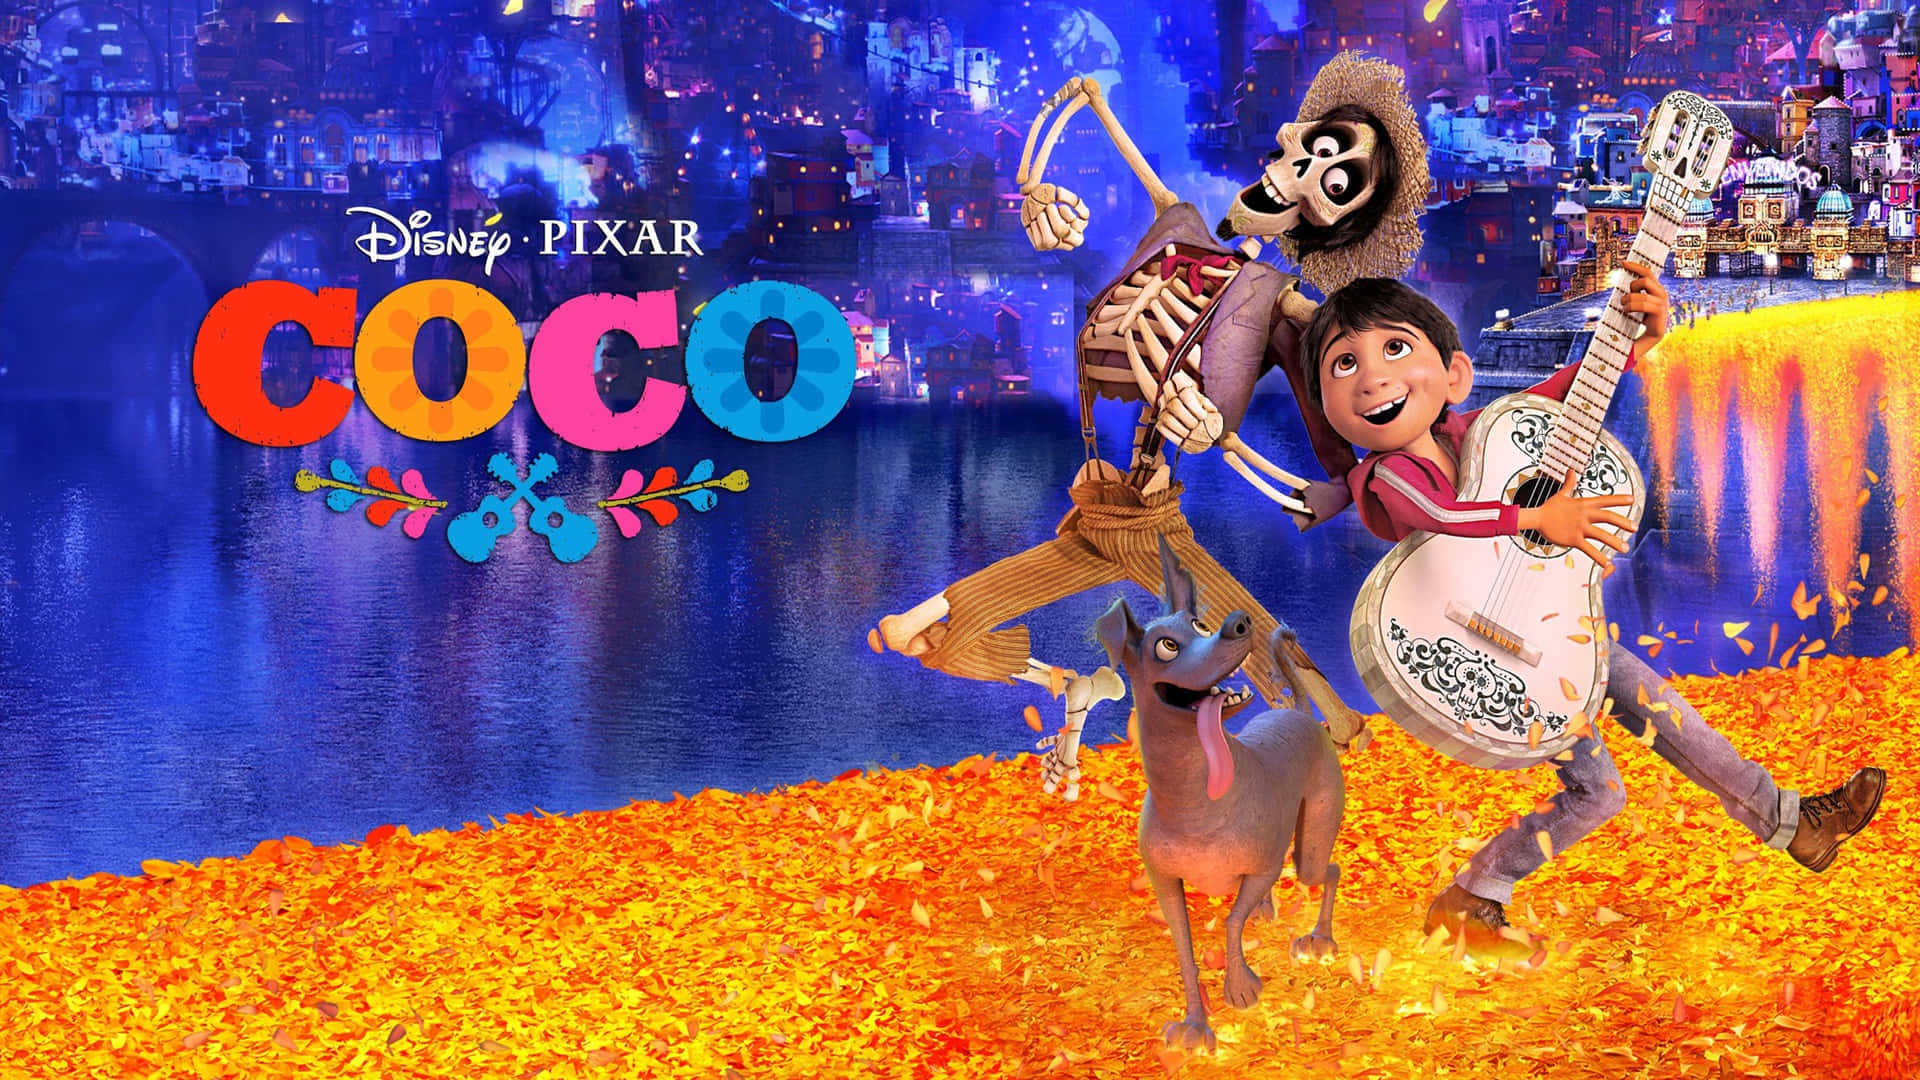 Fejr Mexikansk kultur og ånden fra Coco med denne tidløse Disney film. Wallpaper